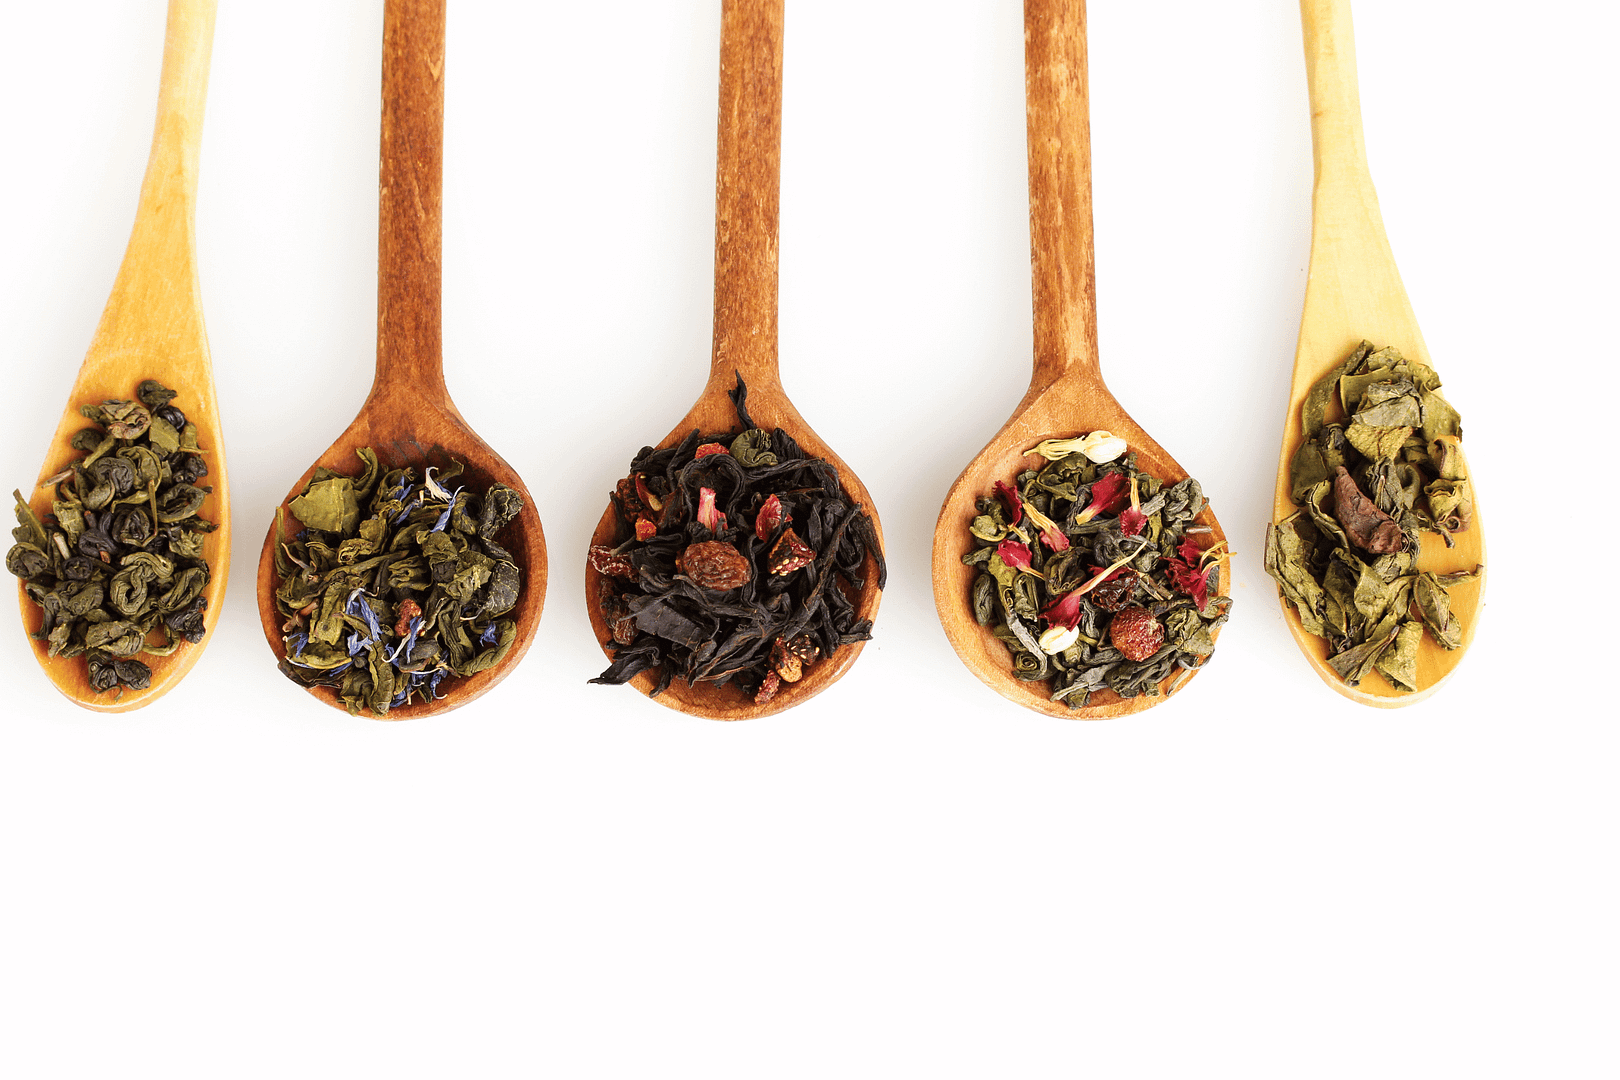 Spoons of certified organic tea